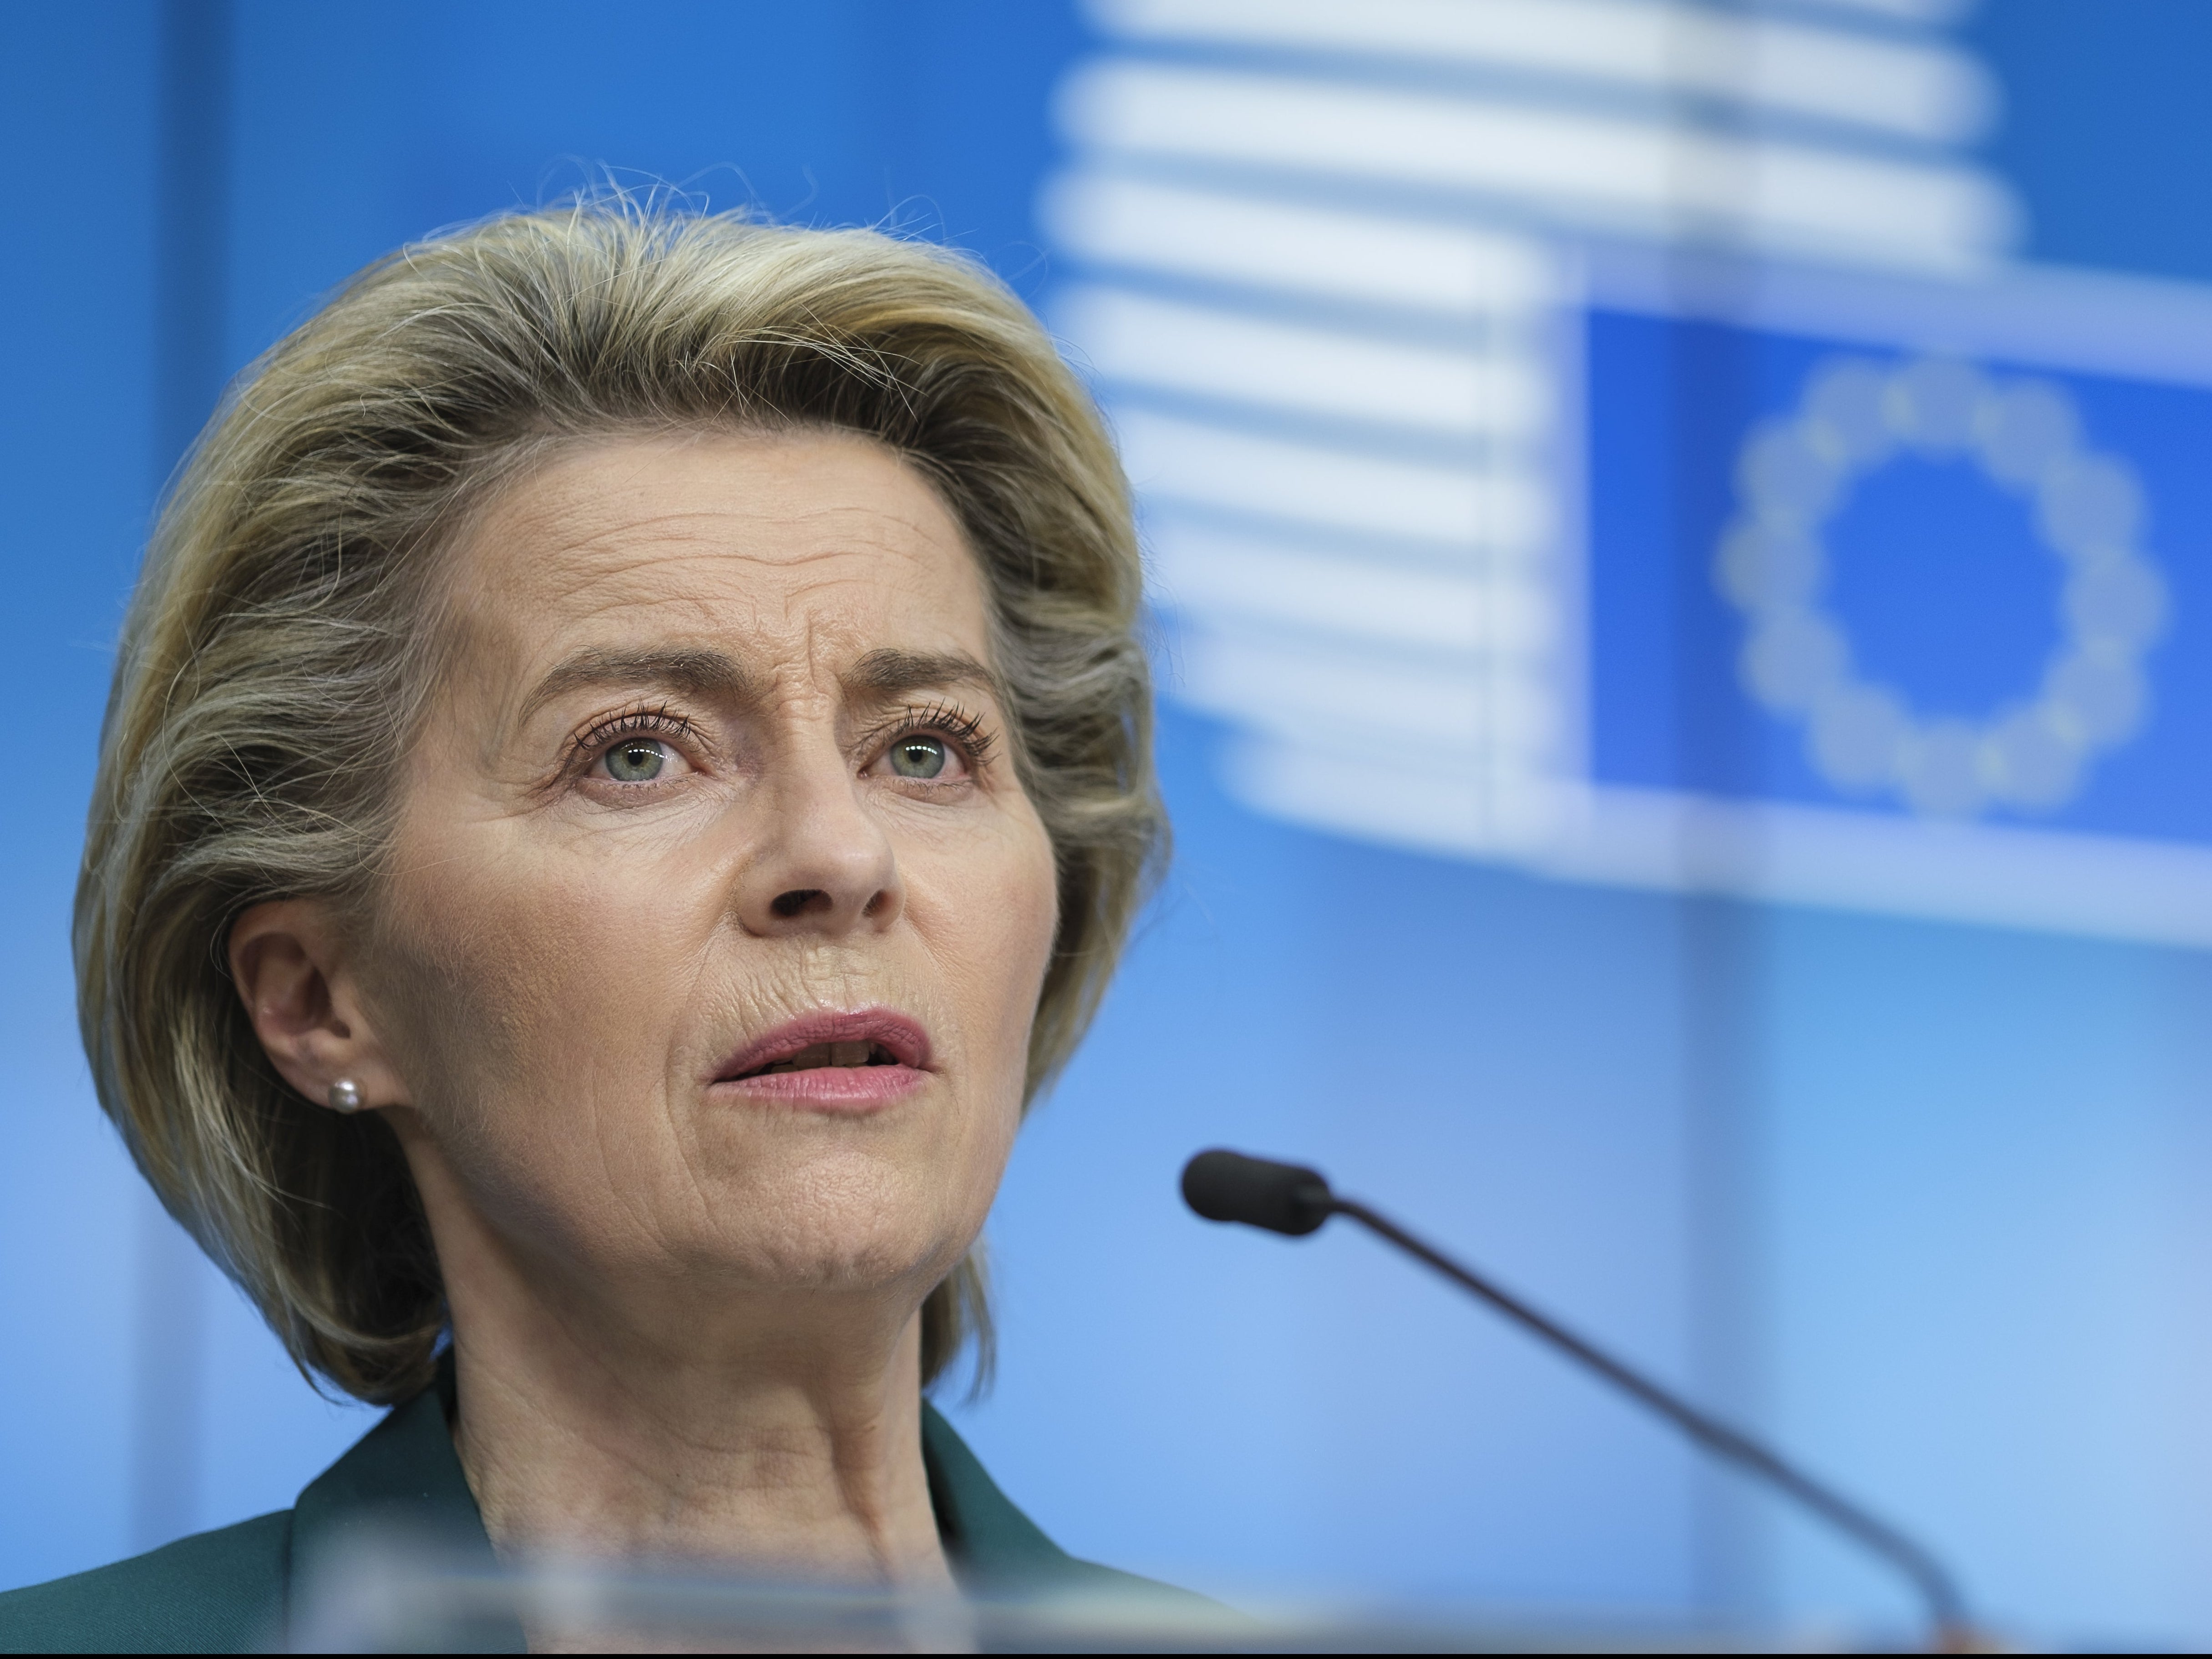 Ursula Von der Leyen said AstraZeneca ‘has to catch up’ and start suppling the EU with vaccines